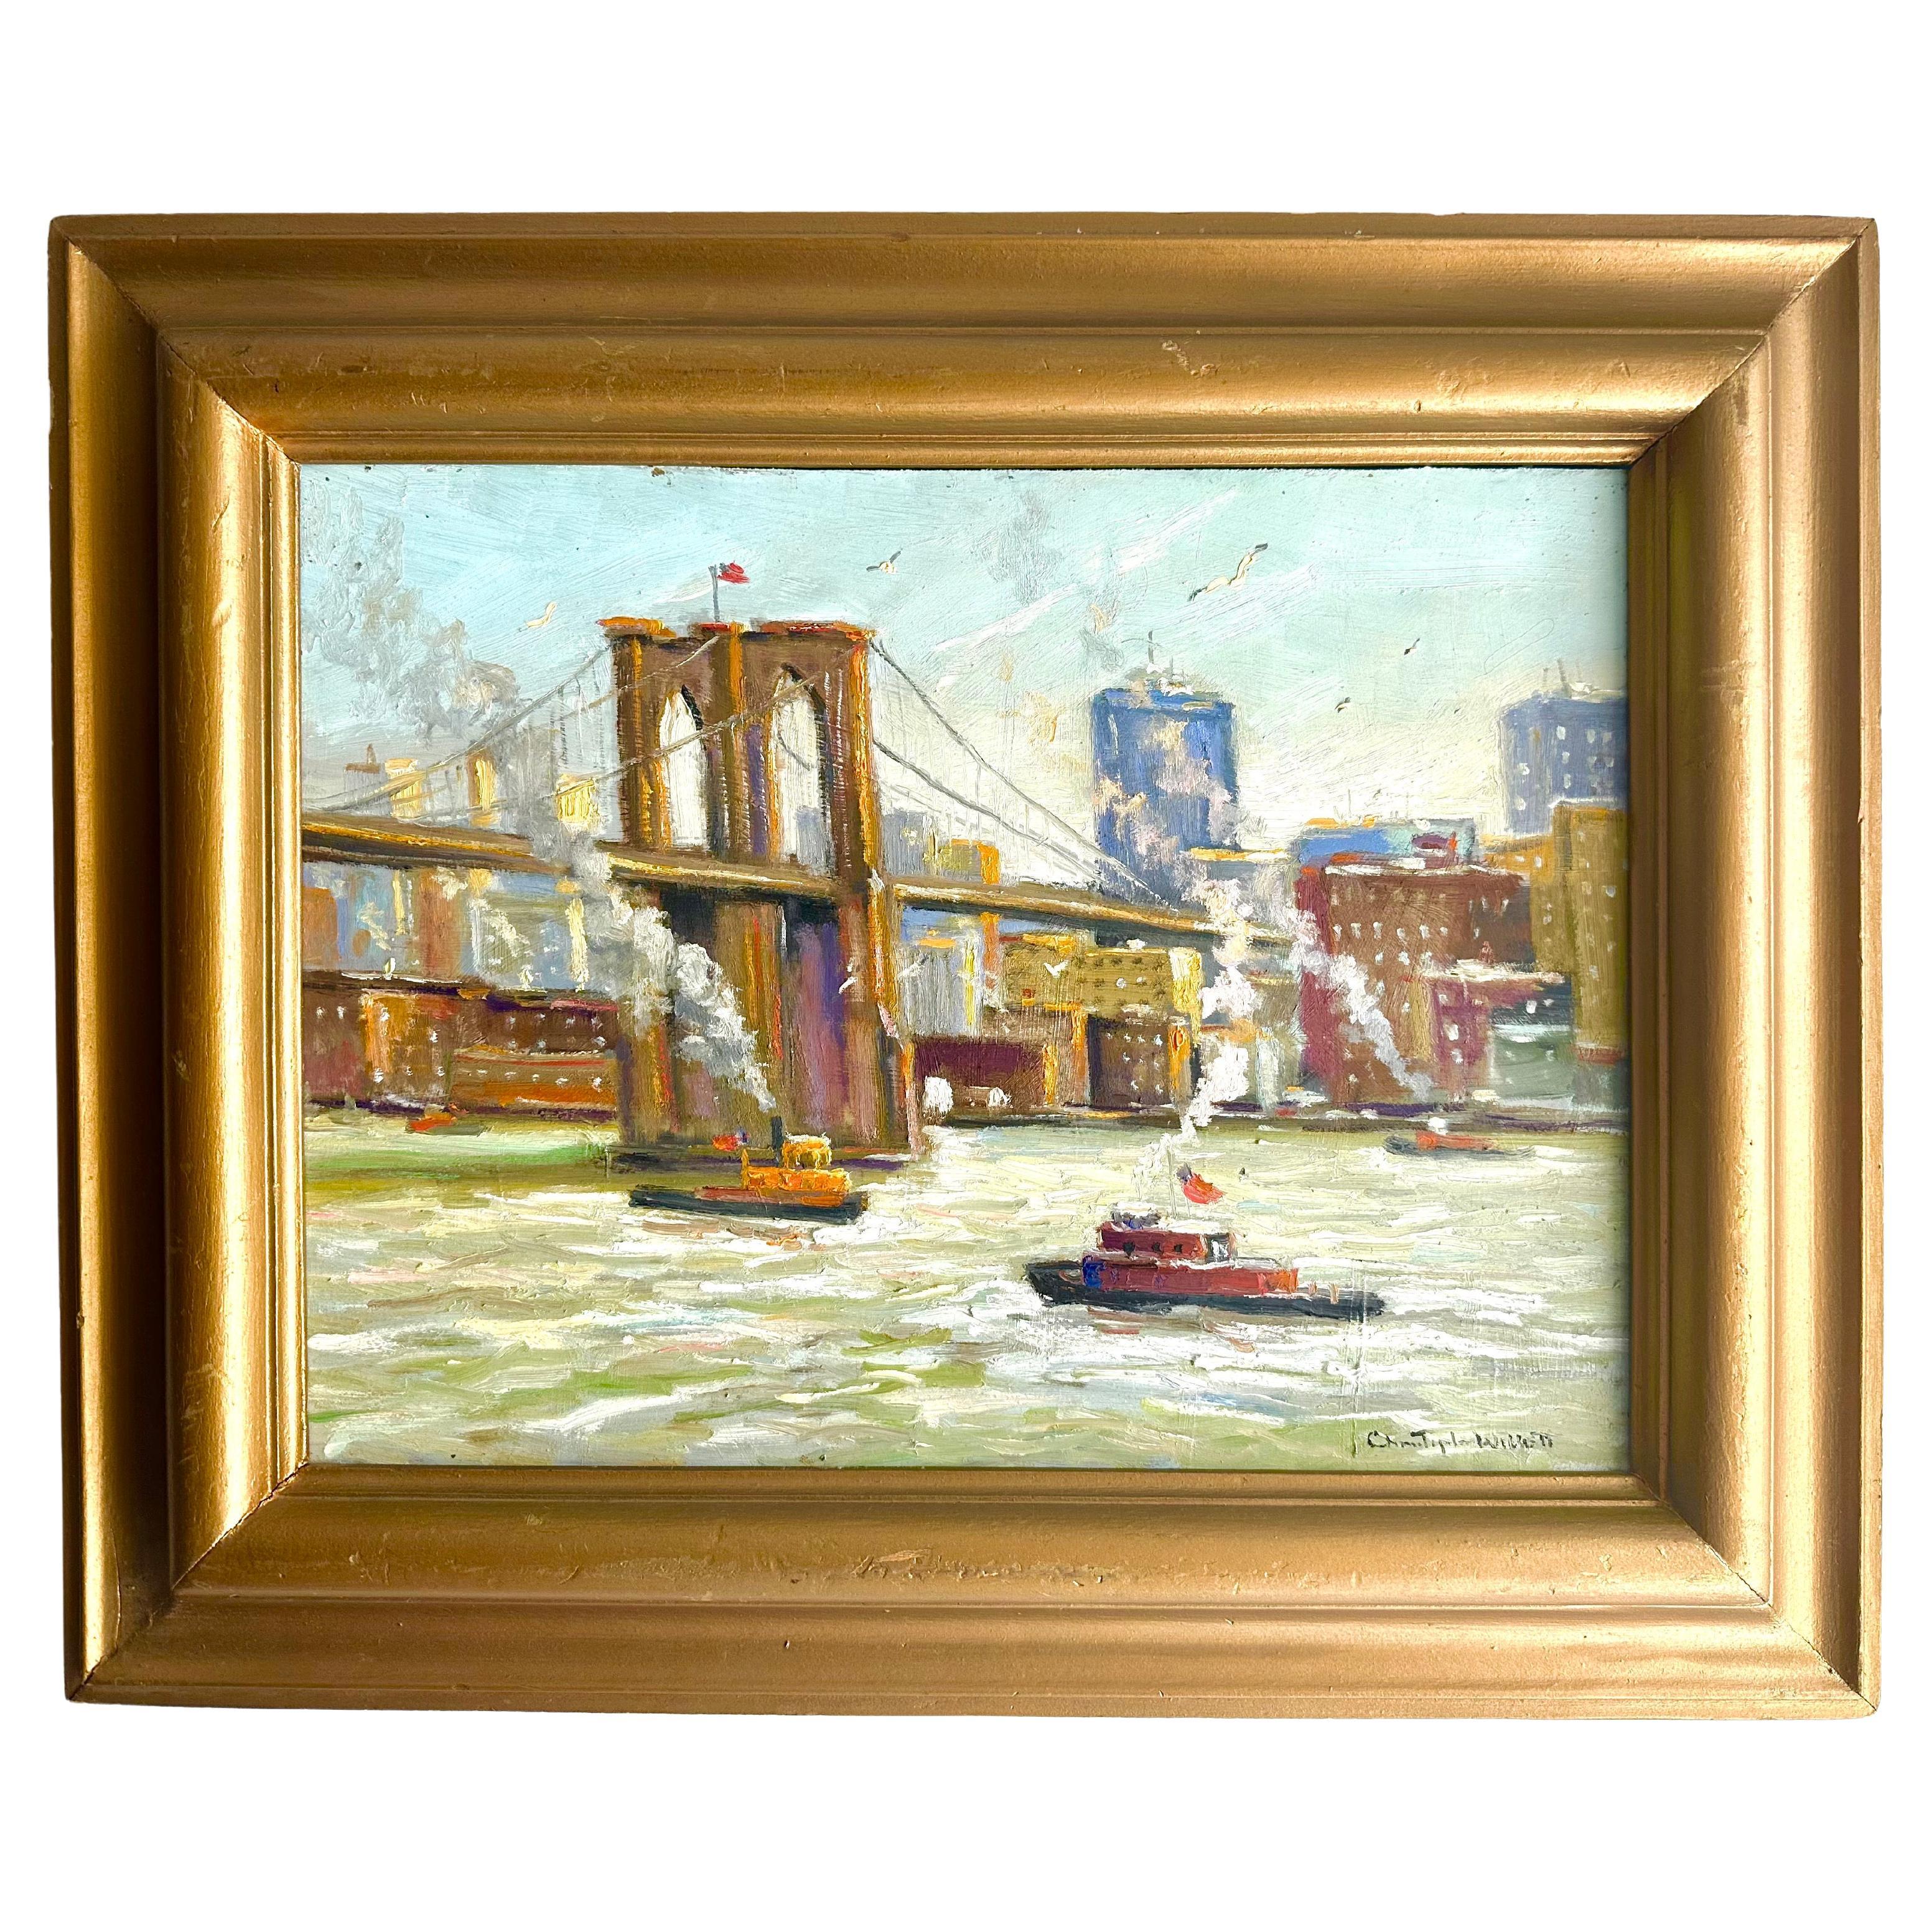 Morgen auf dem East River, New York City, Impressionistische Brückenbootszene, Ölgemälde